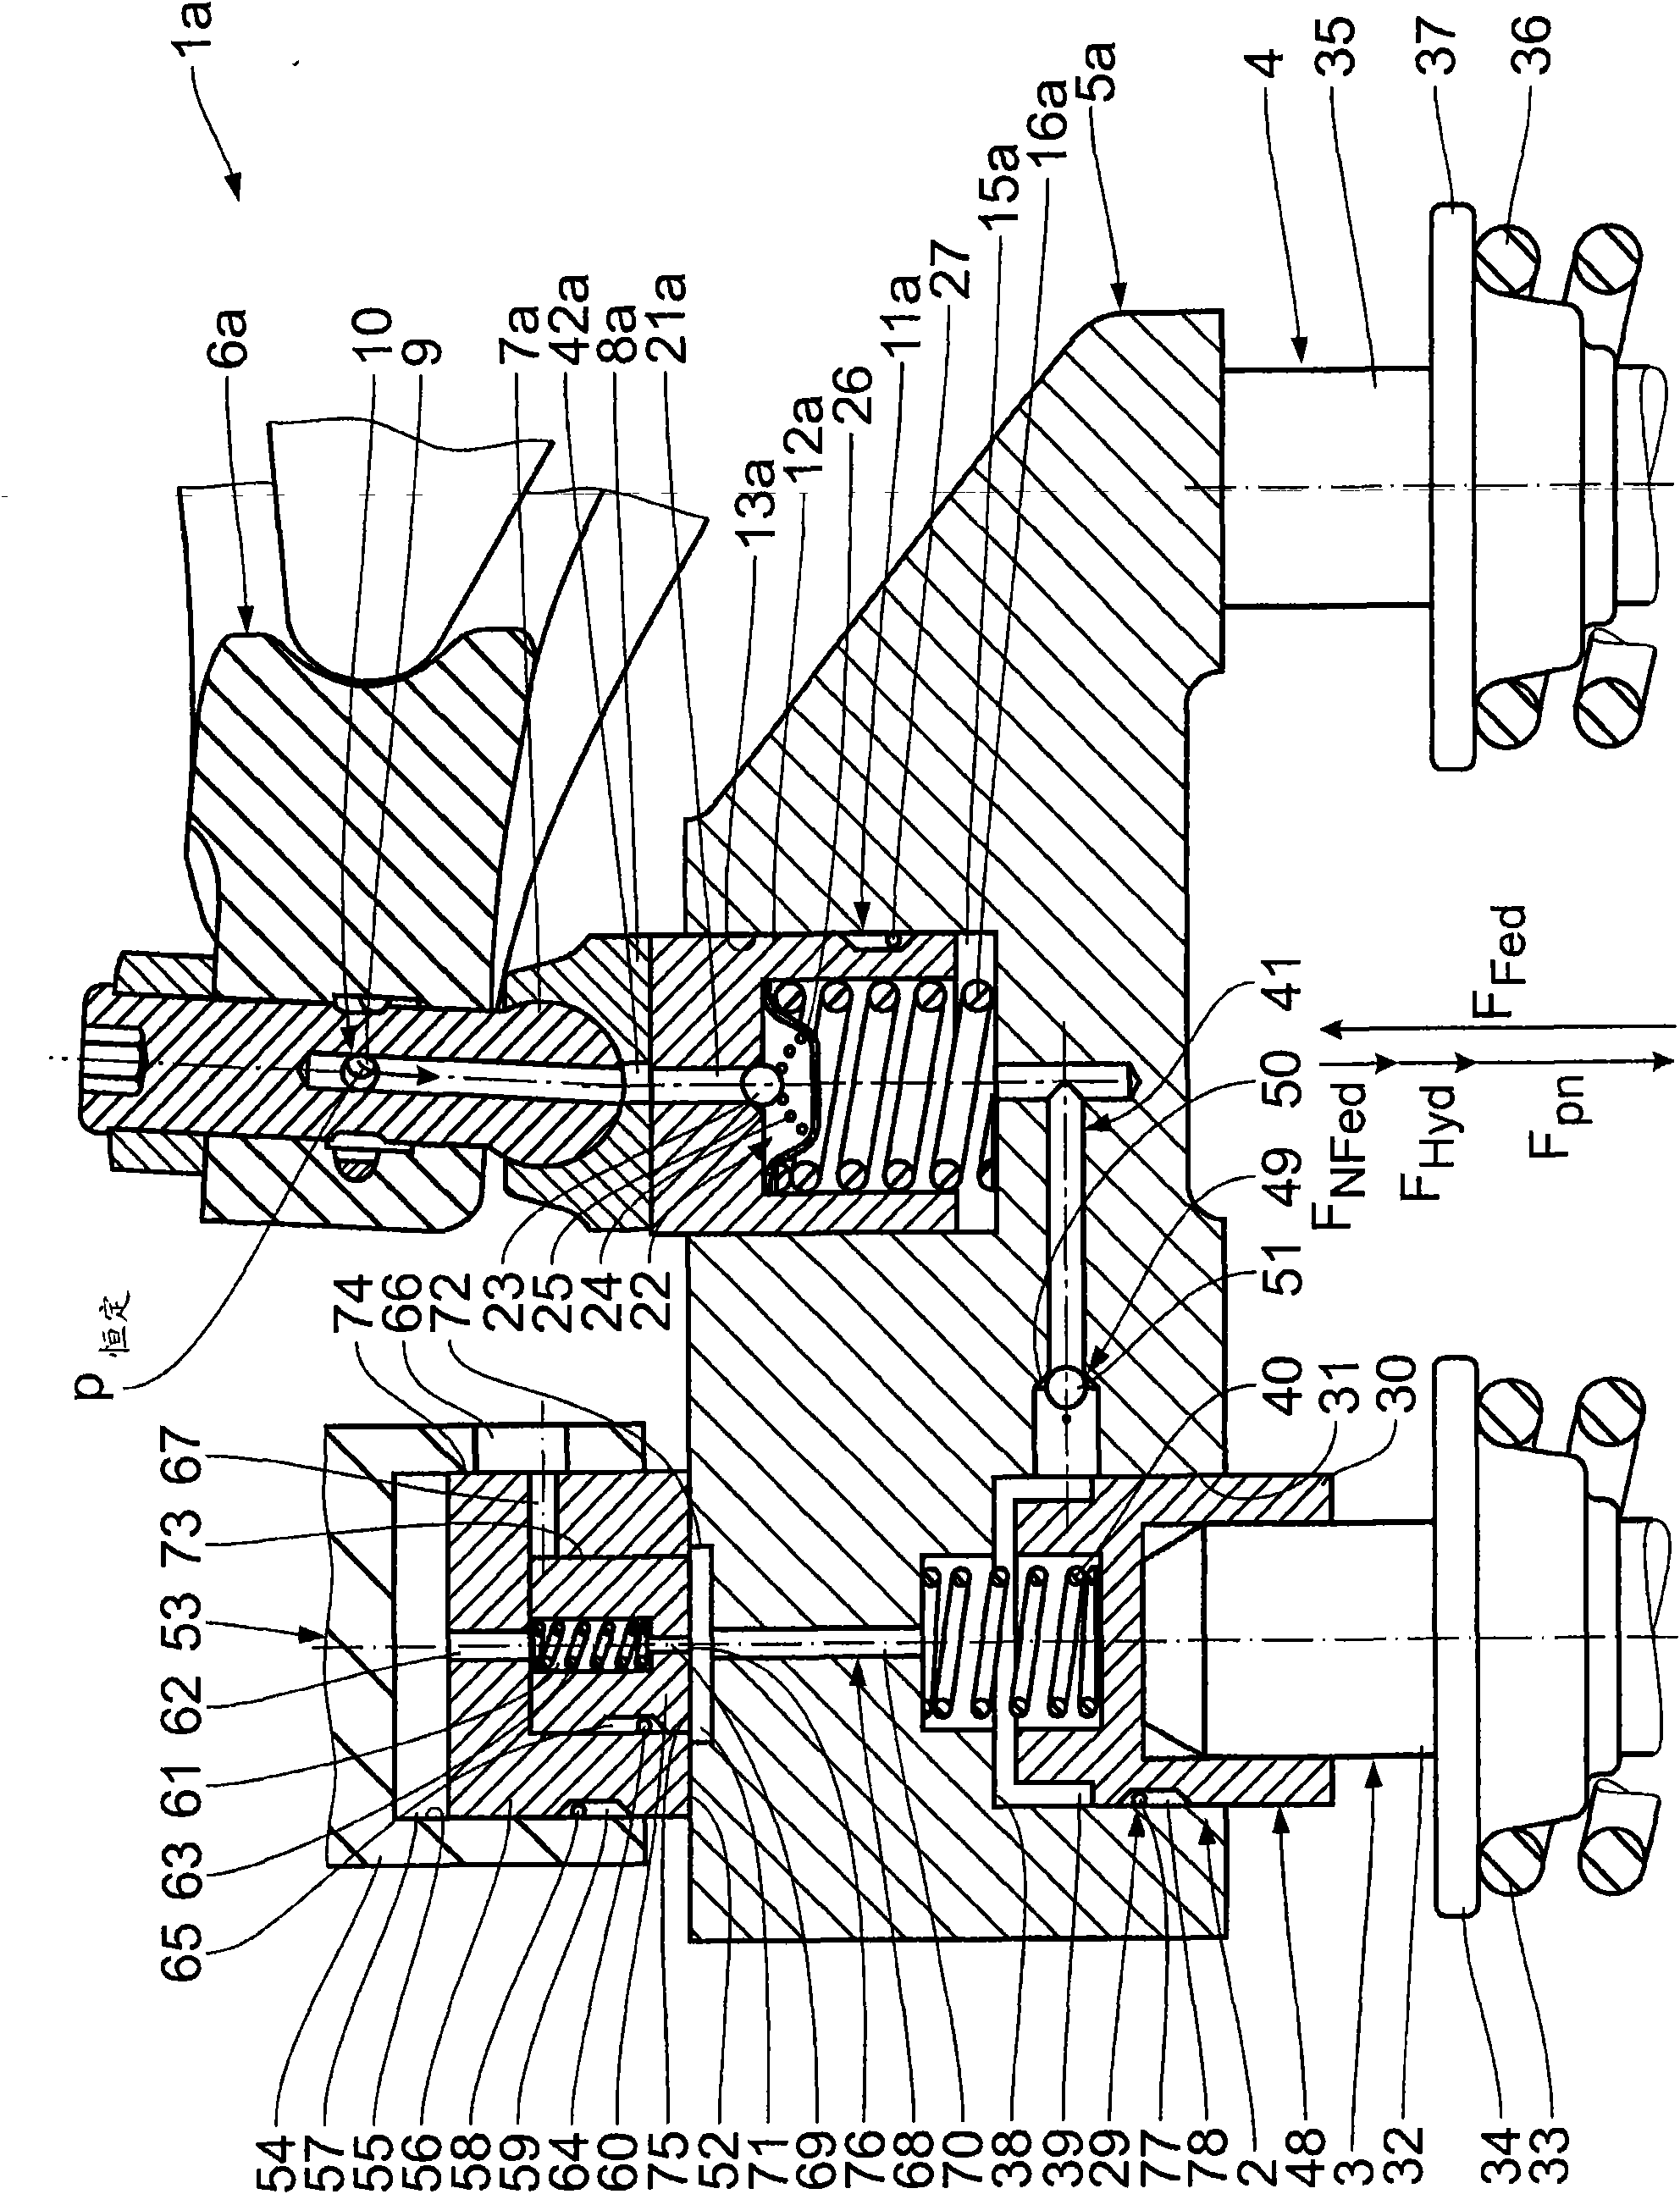 Internal combustion engine having a motor brake device